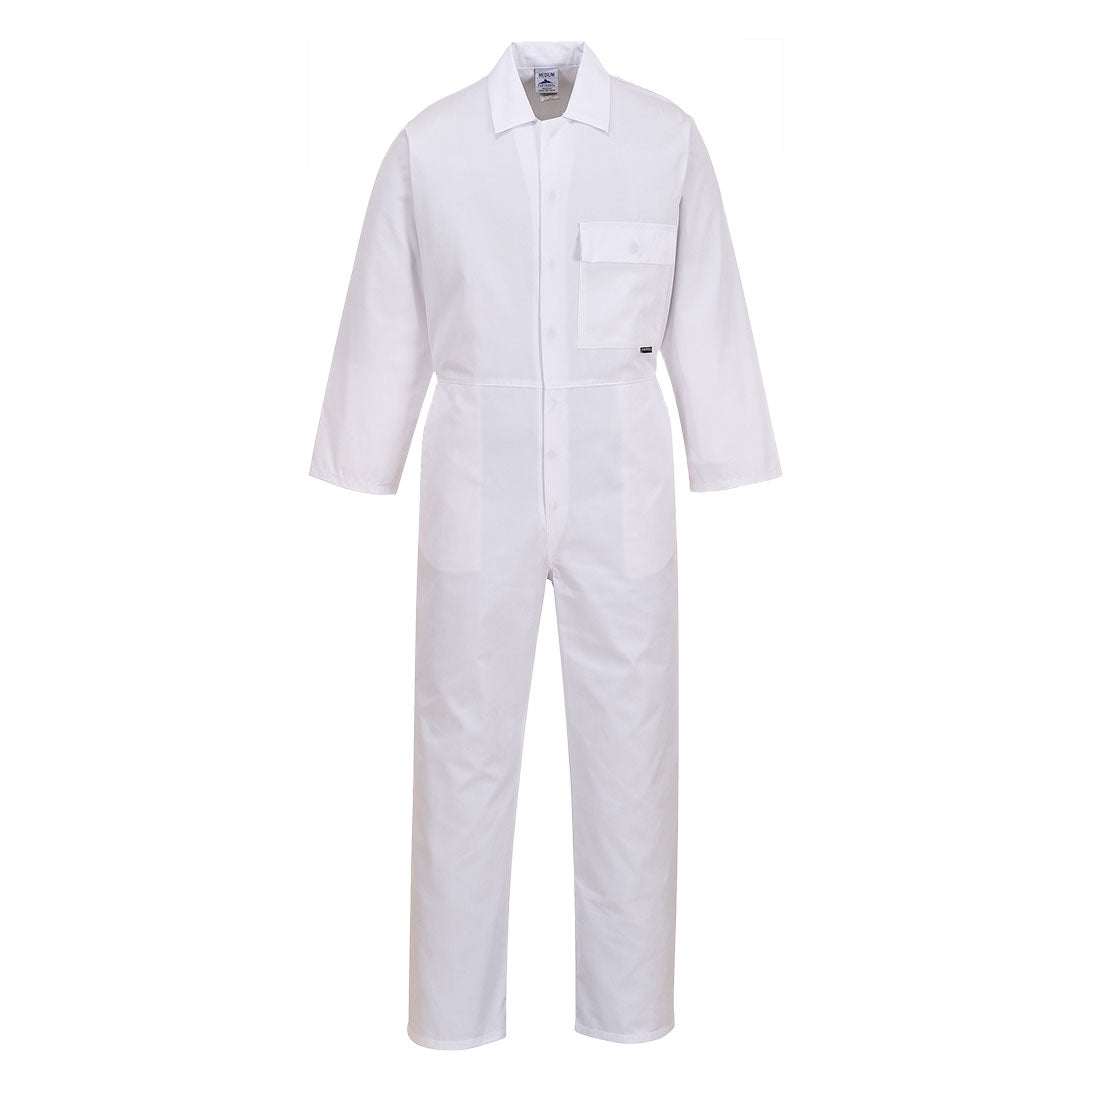 Portwest 2802 - White Standard Coverall boiler suit sz Large Regular